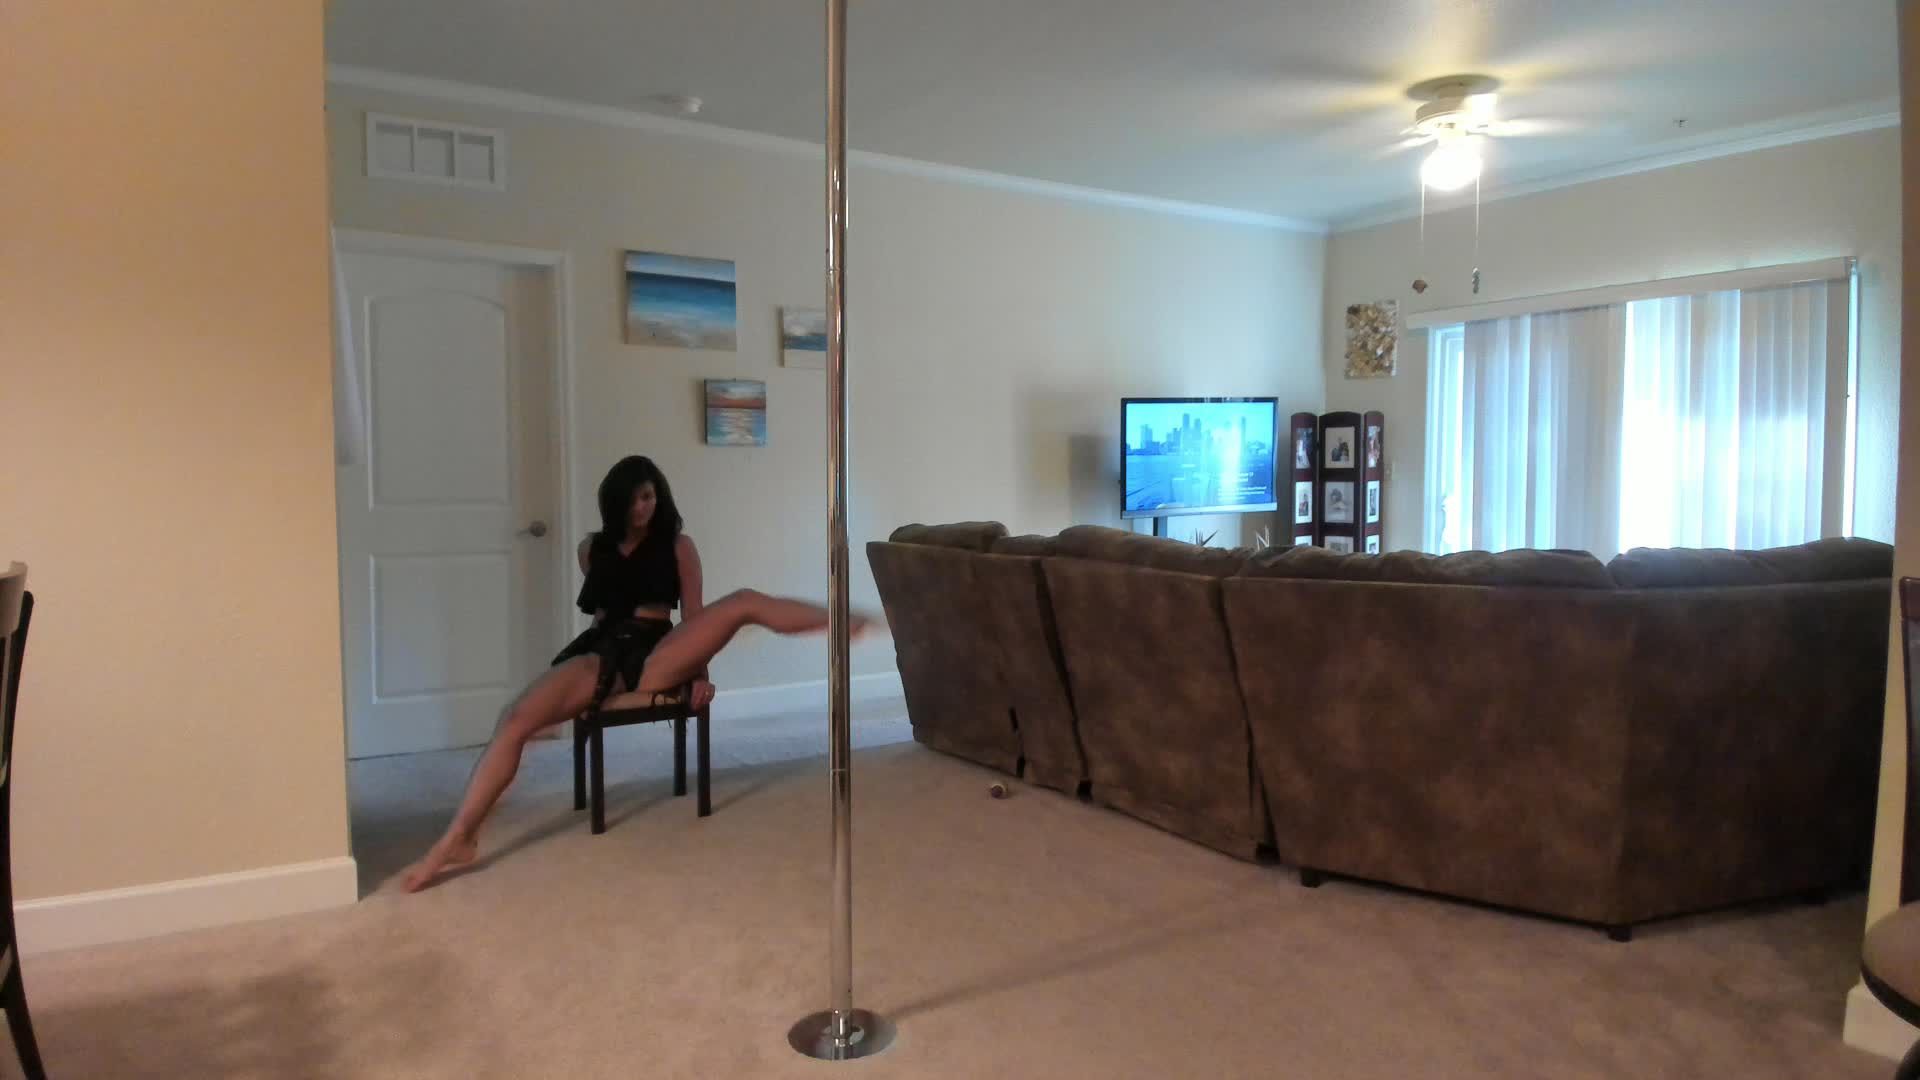 striptease pole dance